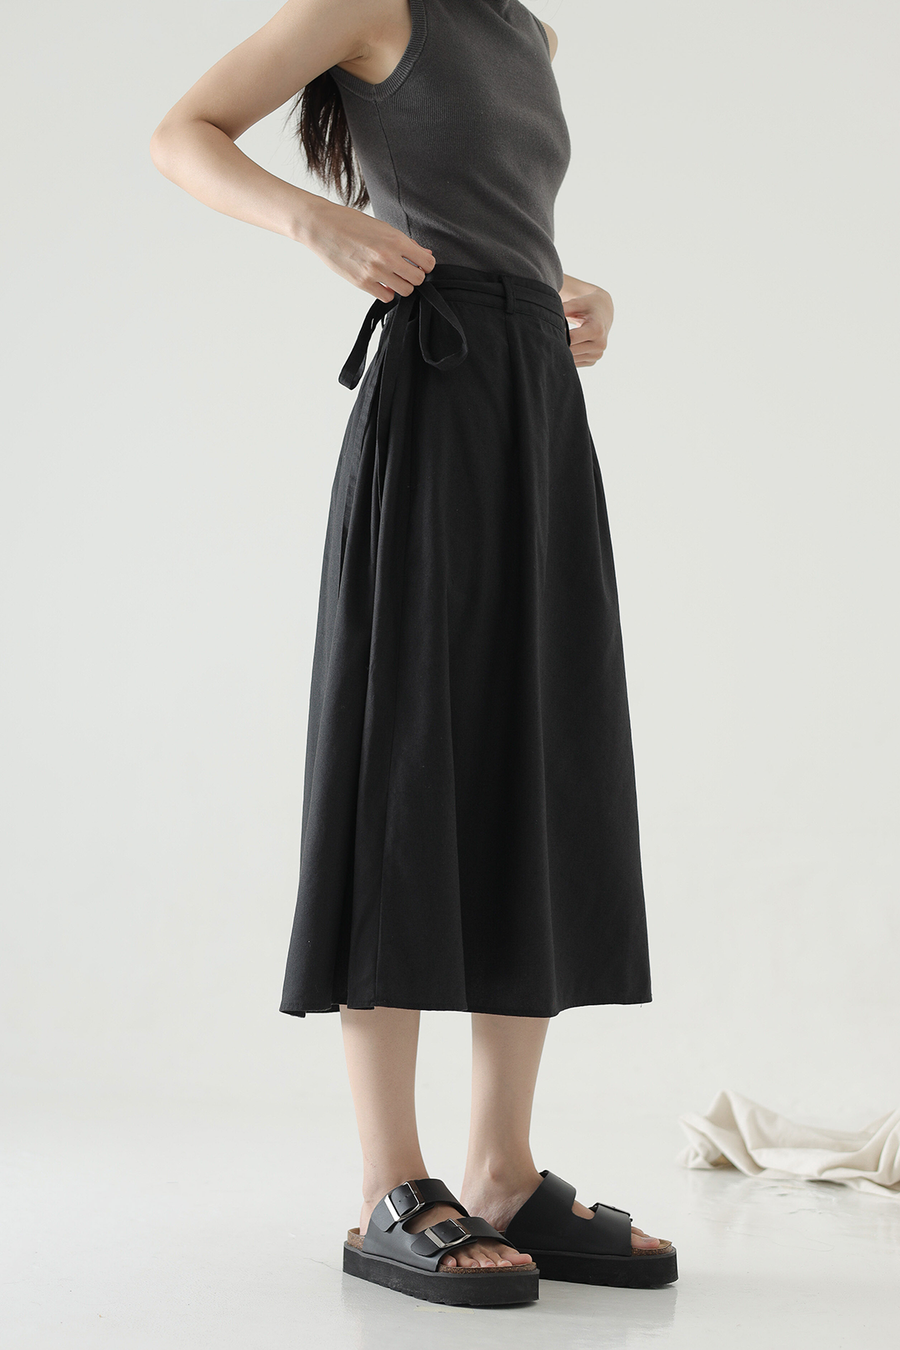 Black Maine Skirt